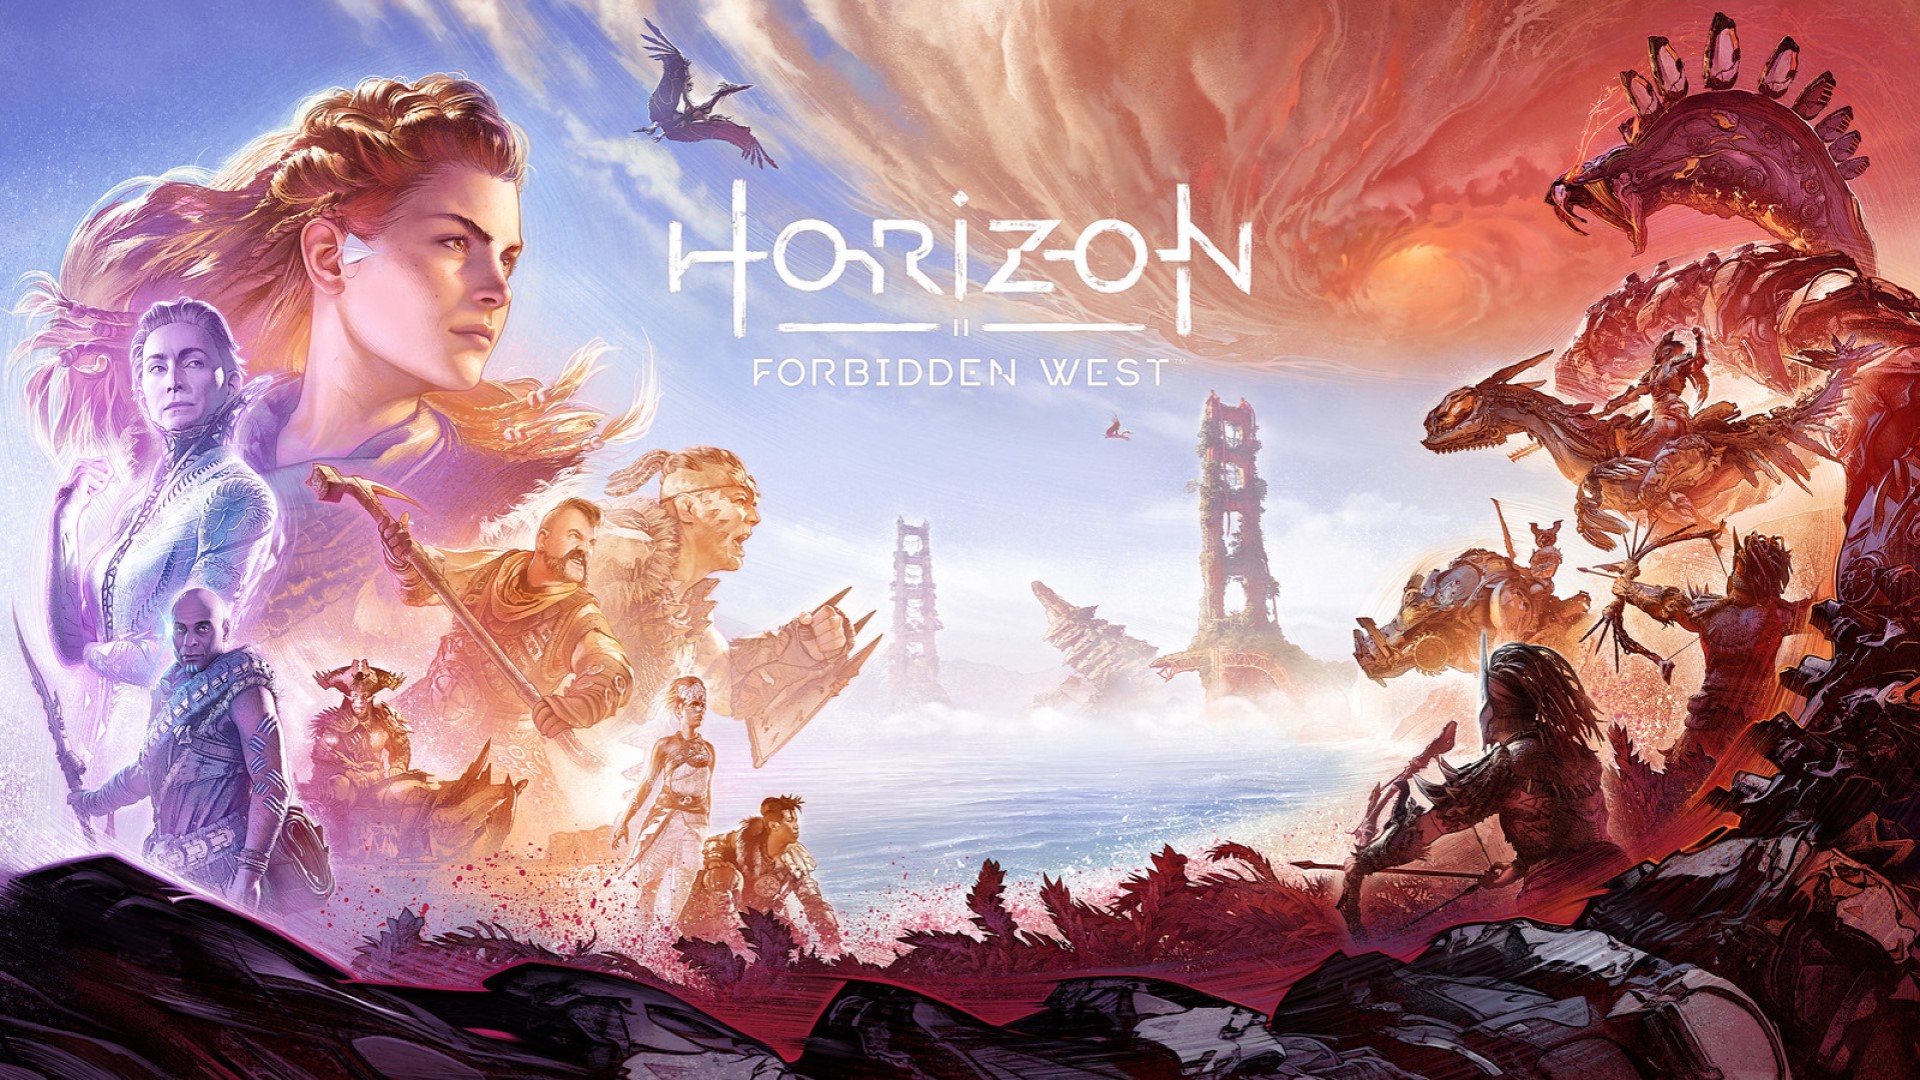 Horizon Forbidden West ทำยอดขายไปแล้วกว่า 8.4 ล้านหน่วย ยอดขายรวมของซีรีส์อยู่ที่ 32.7 ล้านแล้วในตอนนี้